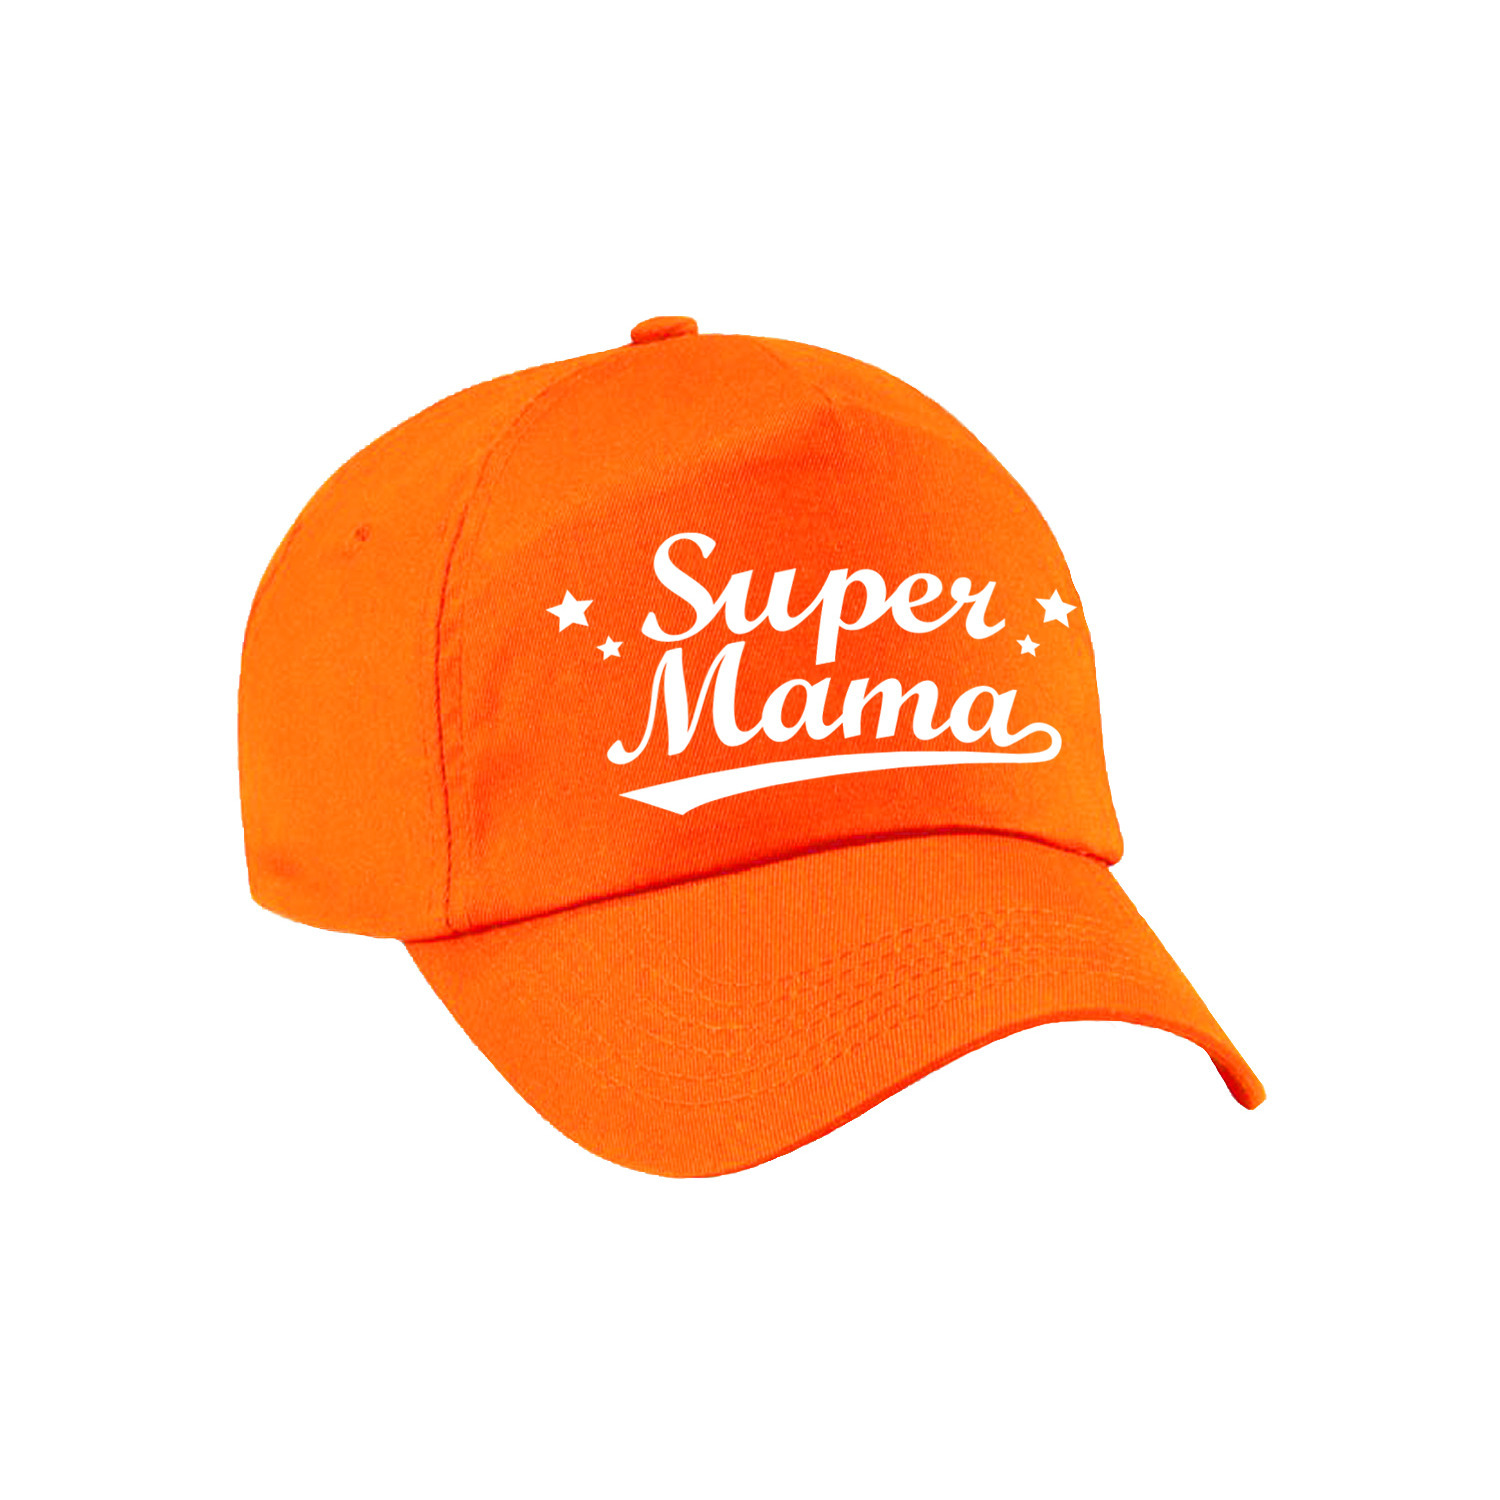 Super mama moederdag cadeau pet /cap oranje voor dames